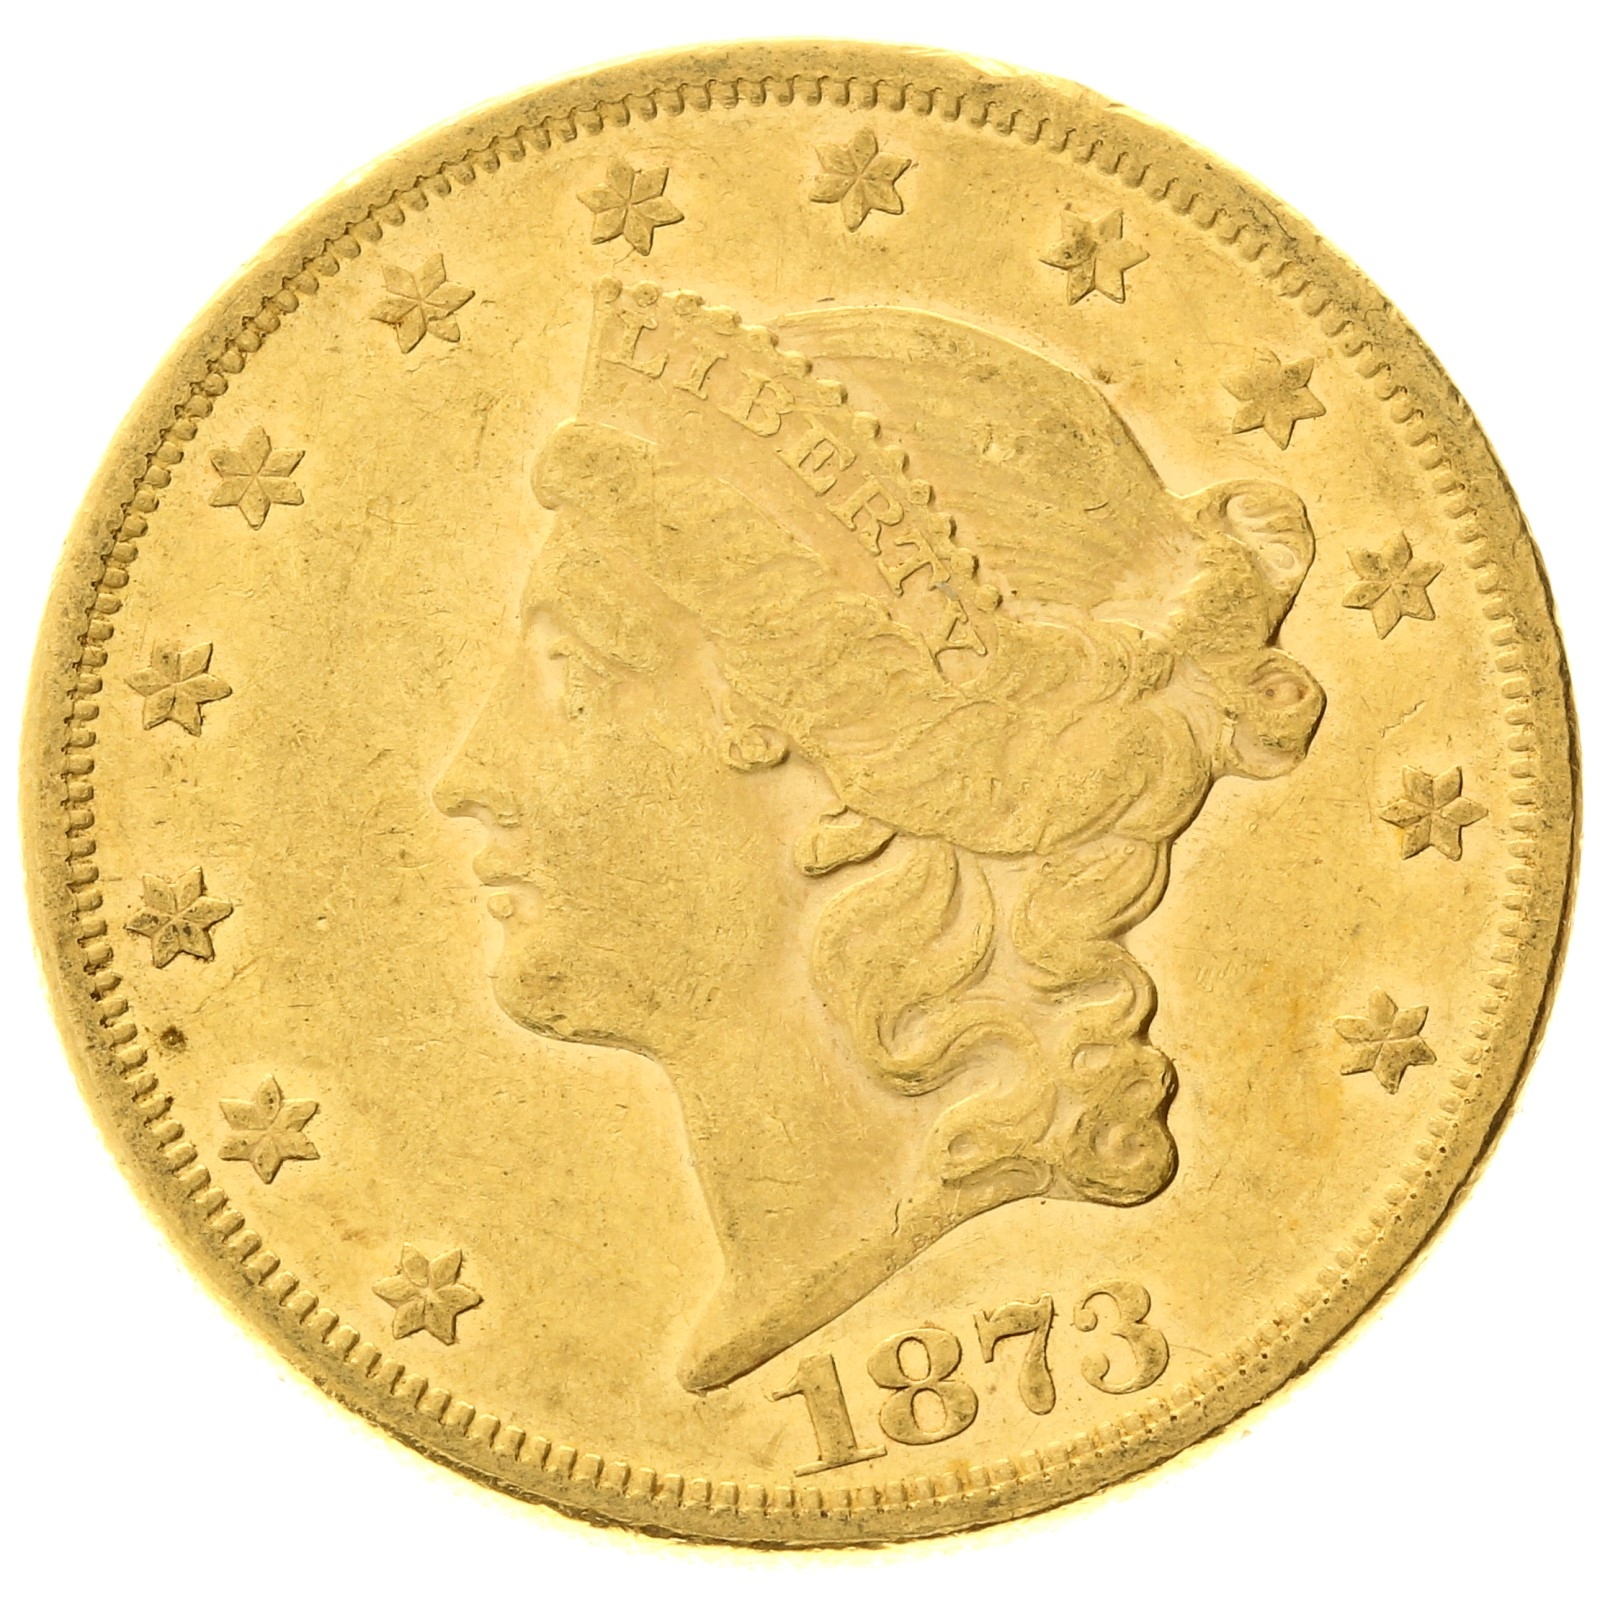 USA - 20 dollars 1873 - Open 3 - Liberty head 